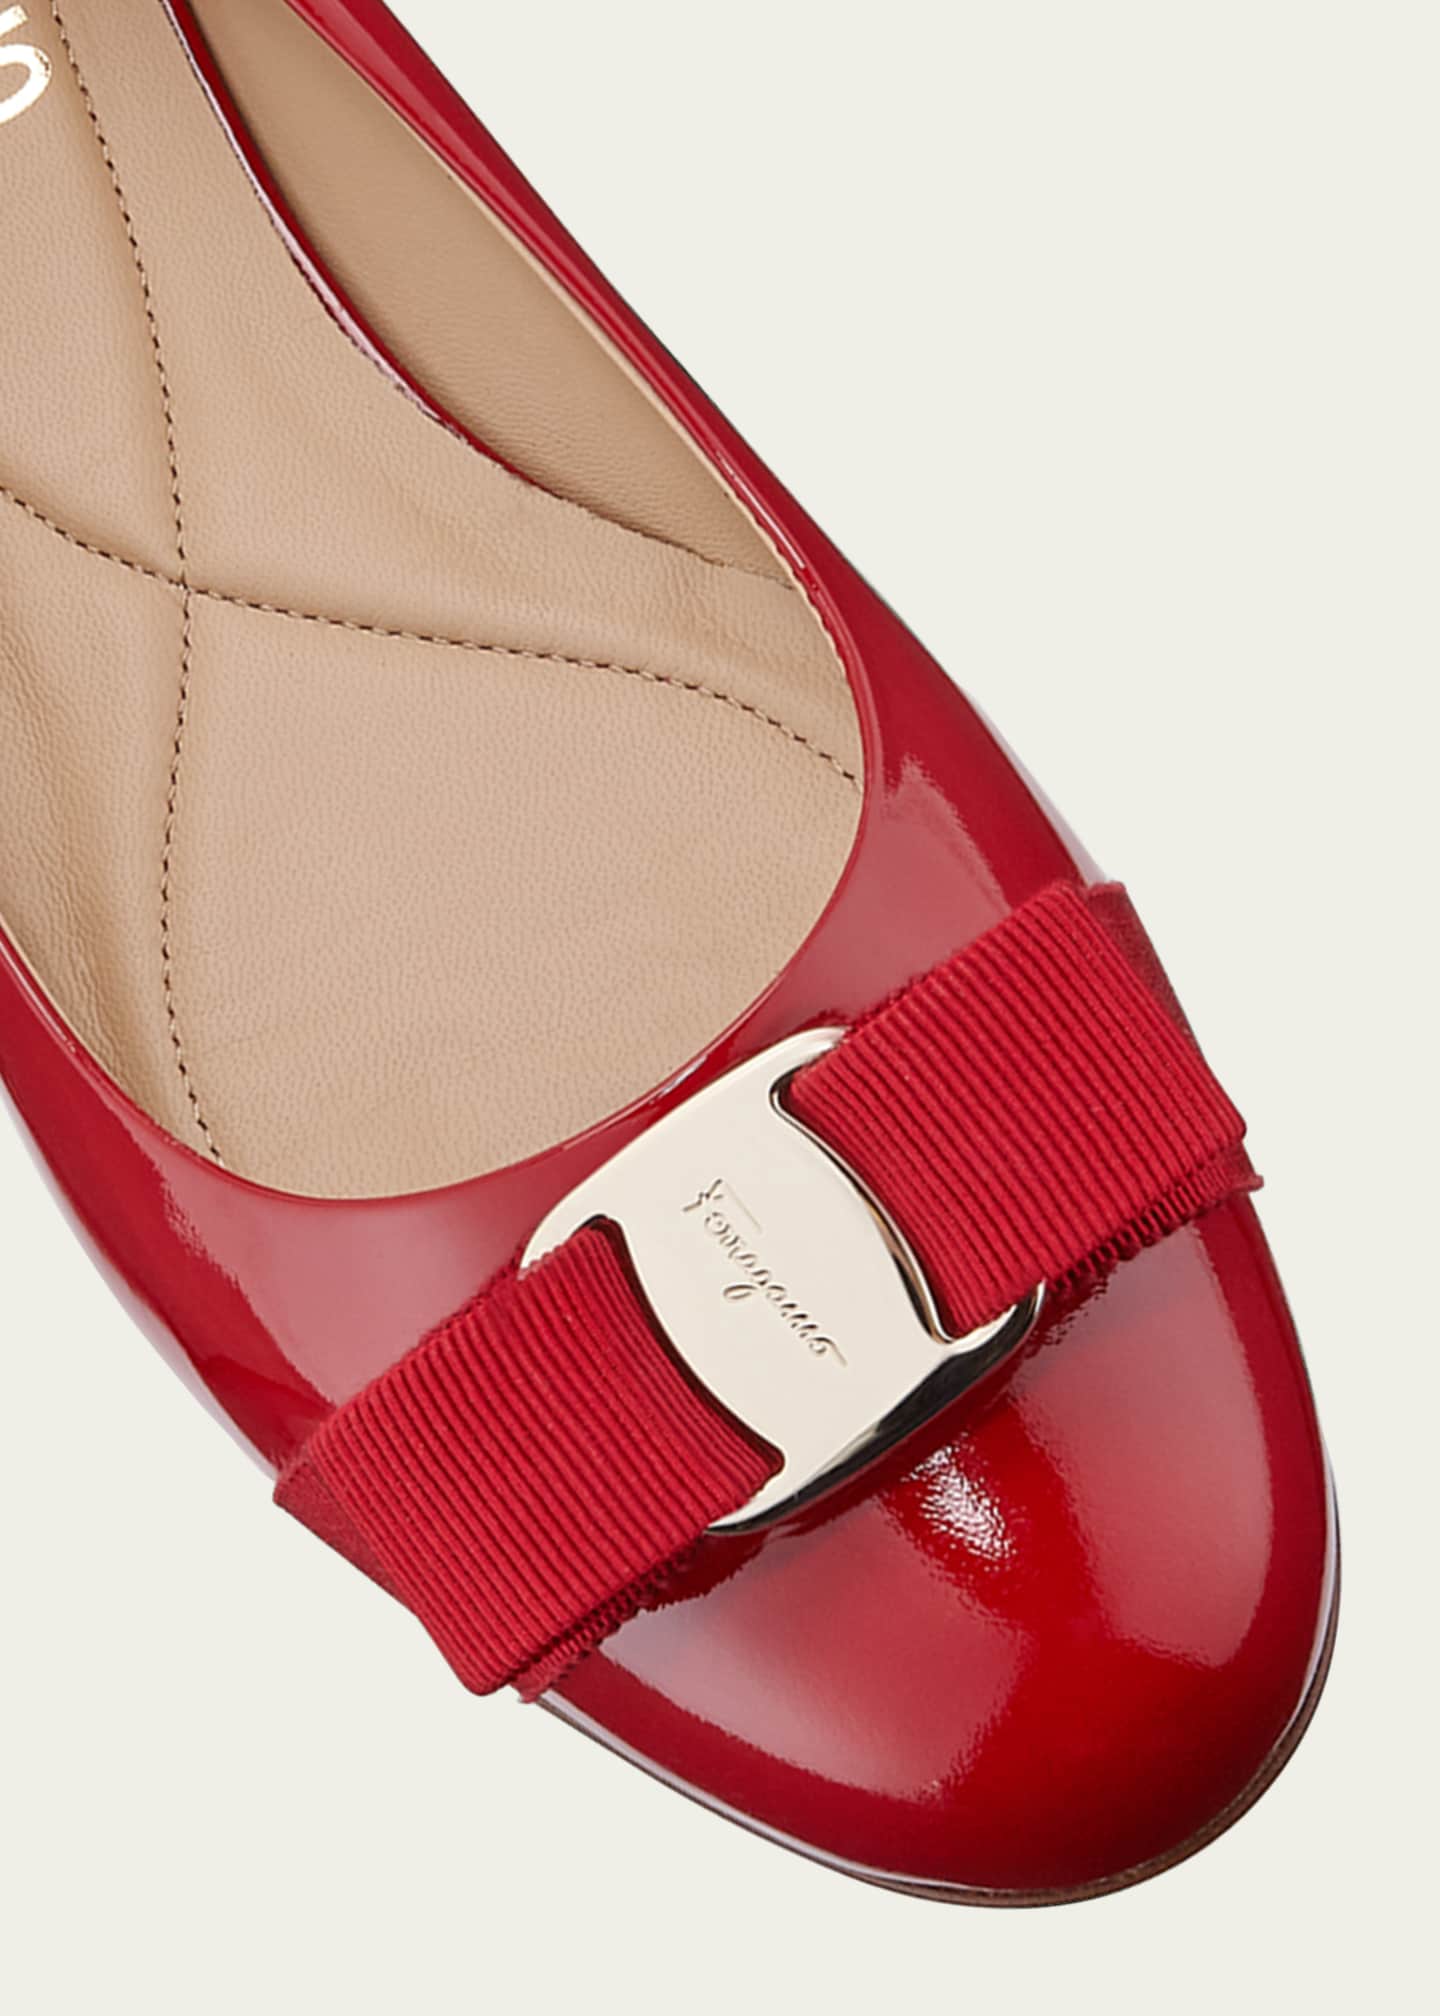 Ferragamo Varina Patent Leather Bow Ballerina Flats - Bergdorf Goodman